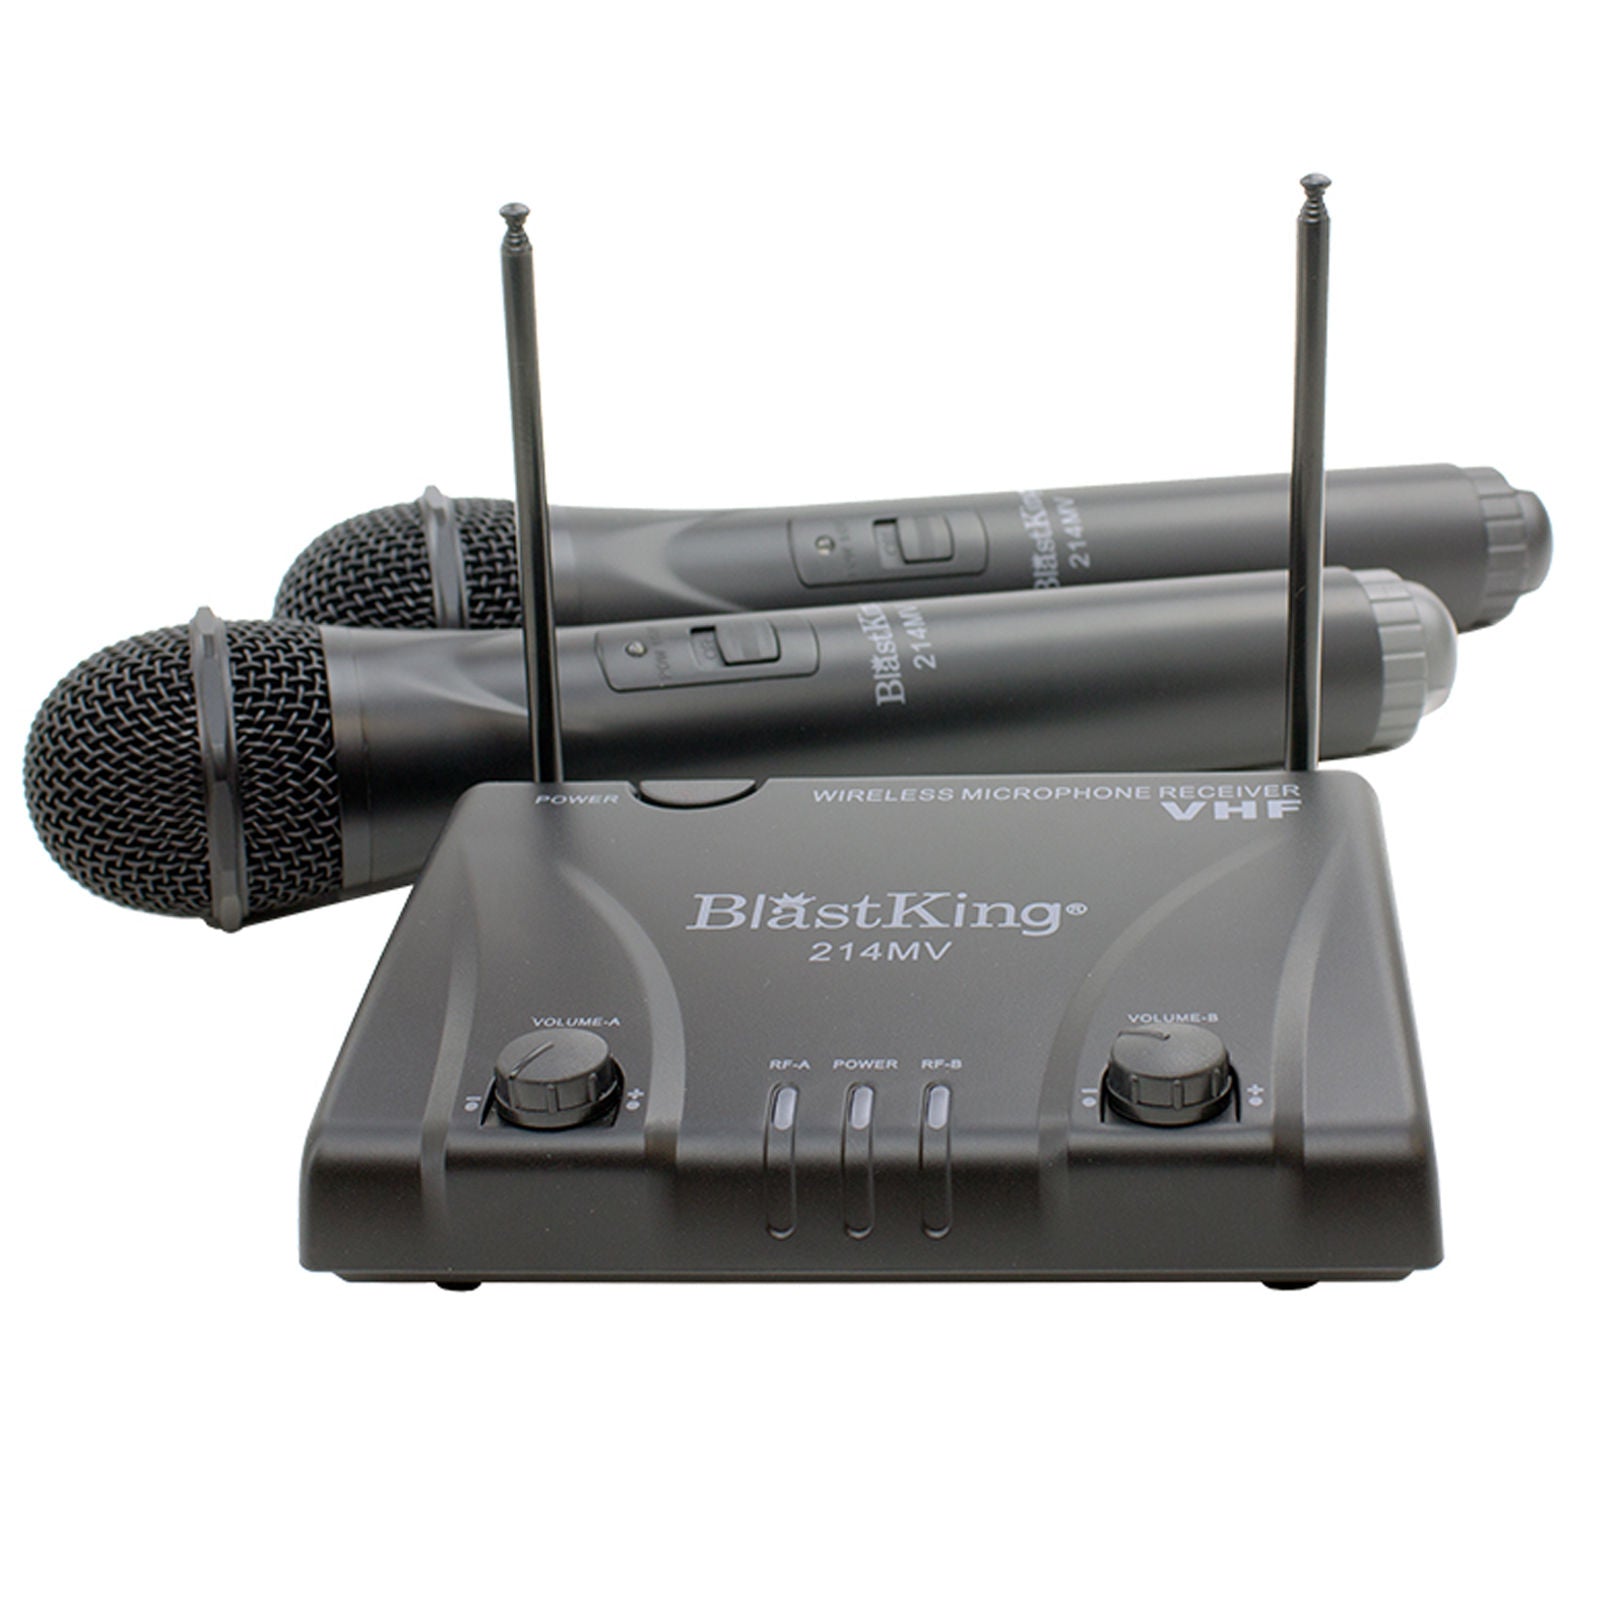 Blastking 214MV Dual Channel Wireless Microphone System